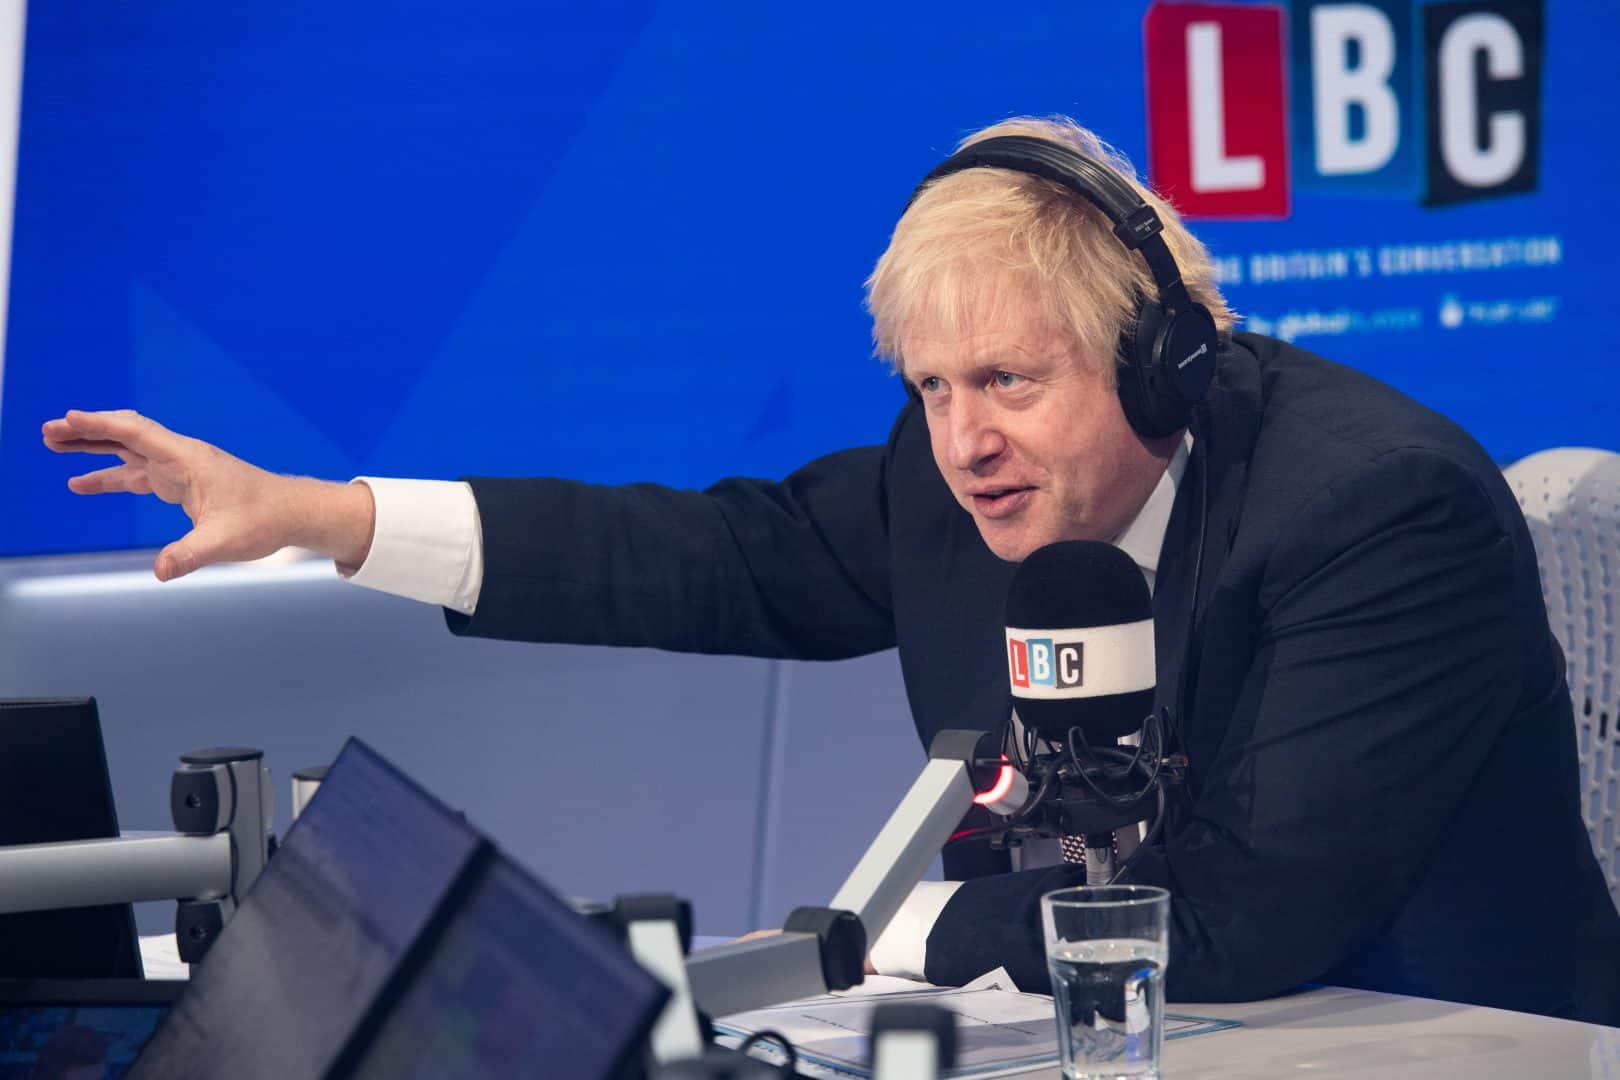 Single mum asks Boris Johnson why he mocks families like hers while hiding how many kids he has fathered